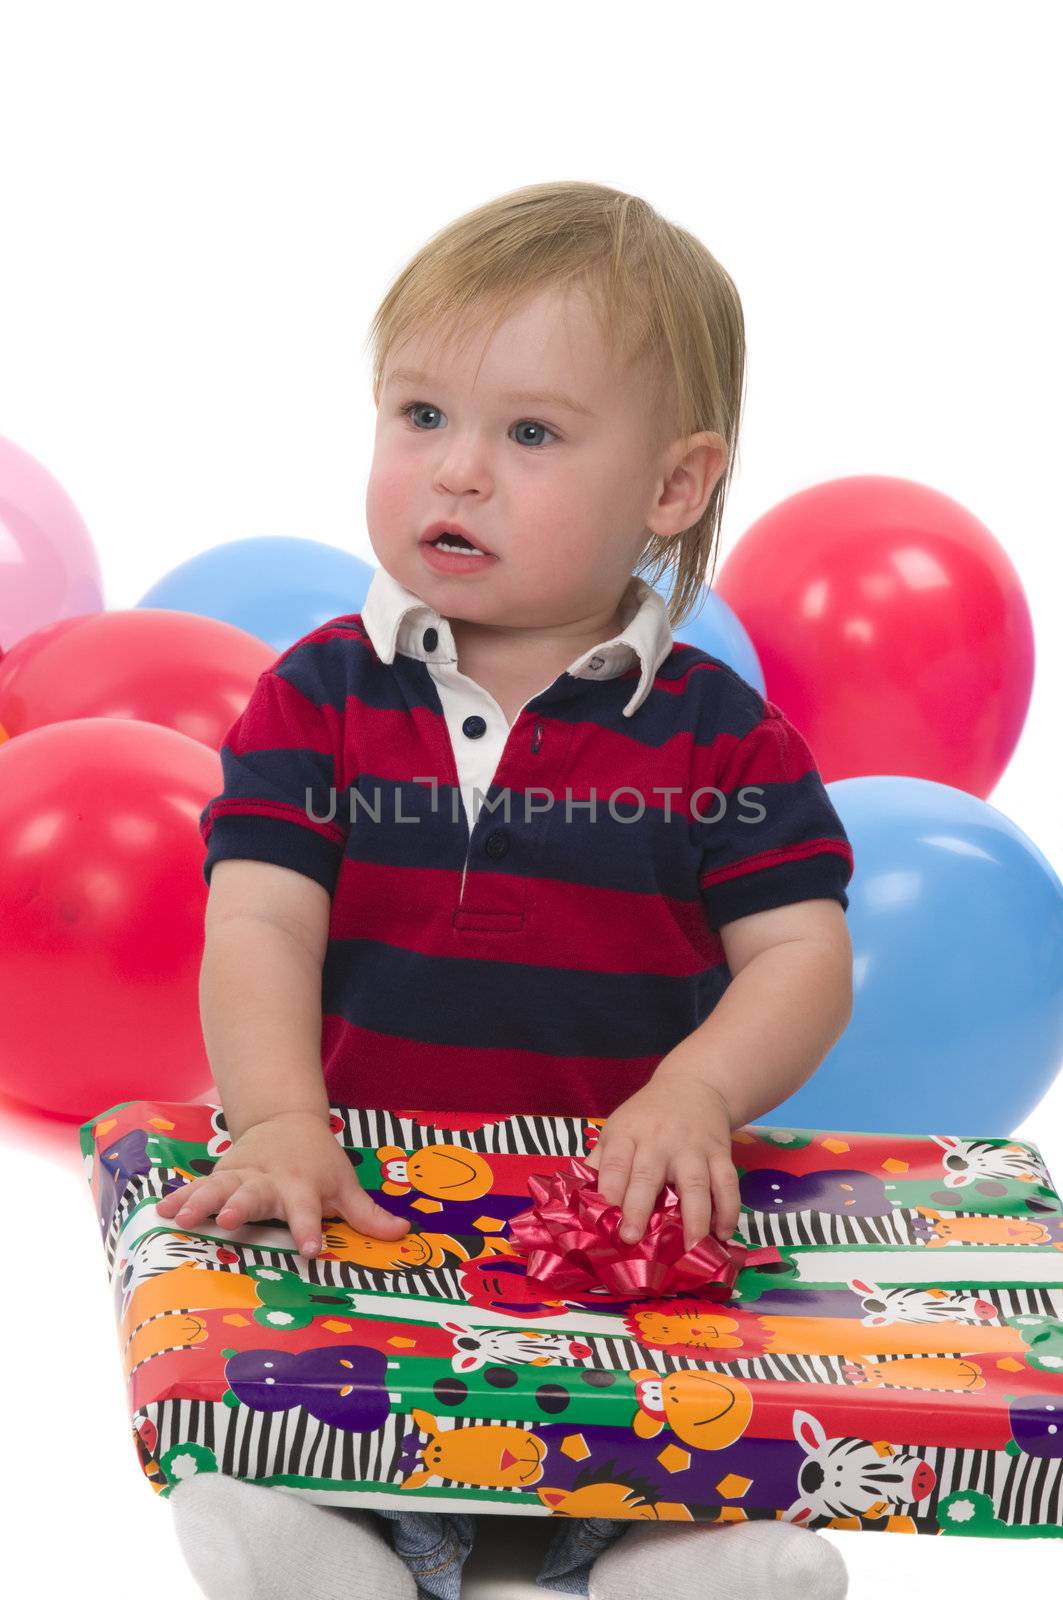 Very cute baby boy opening his birthday gift